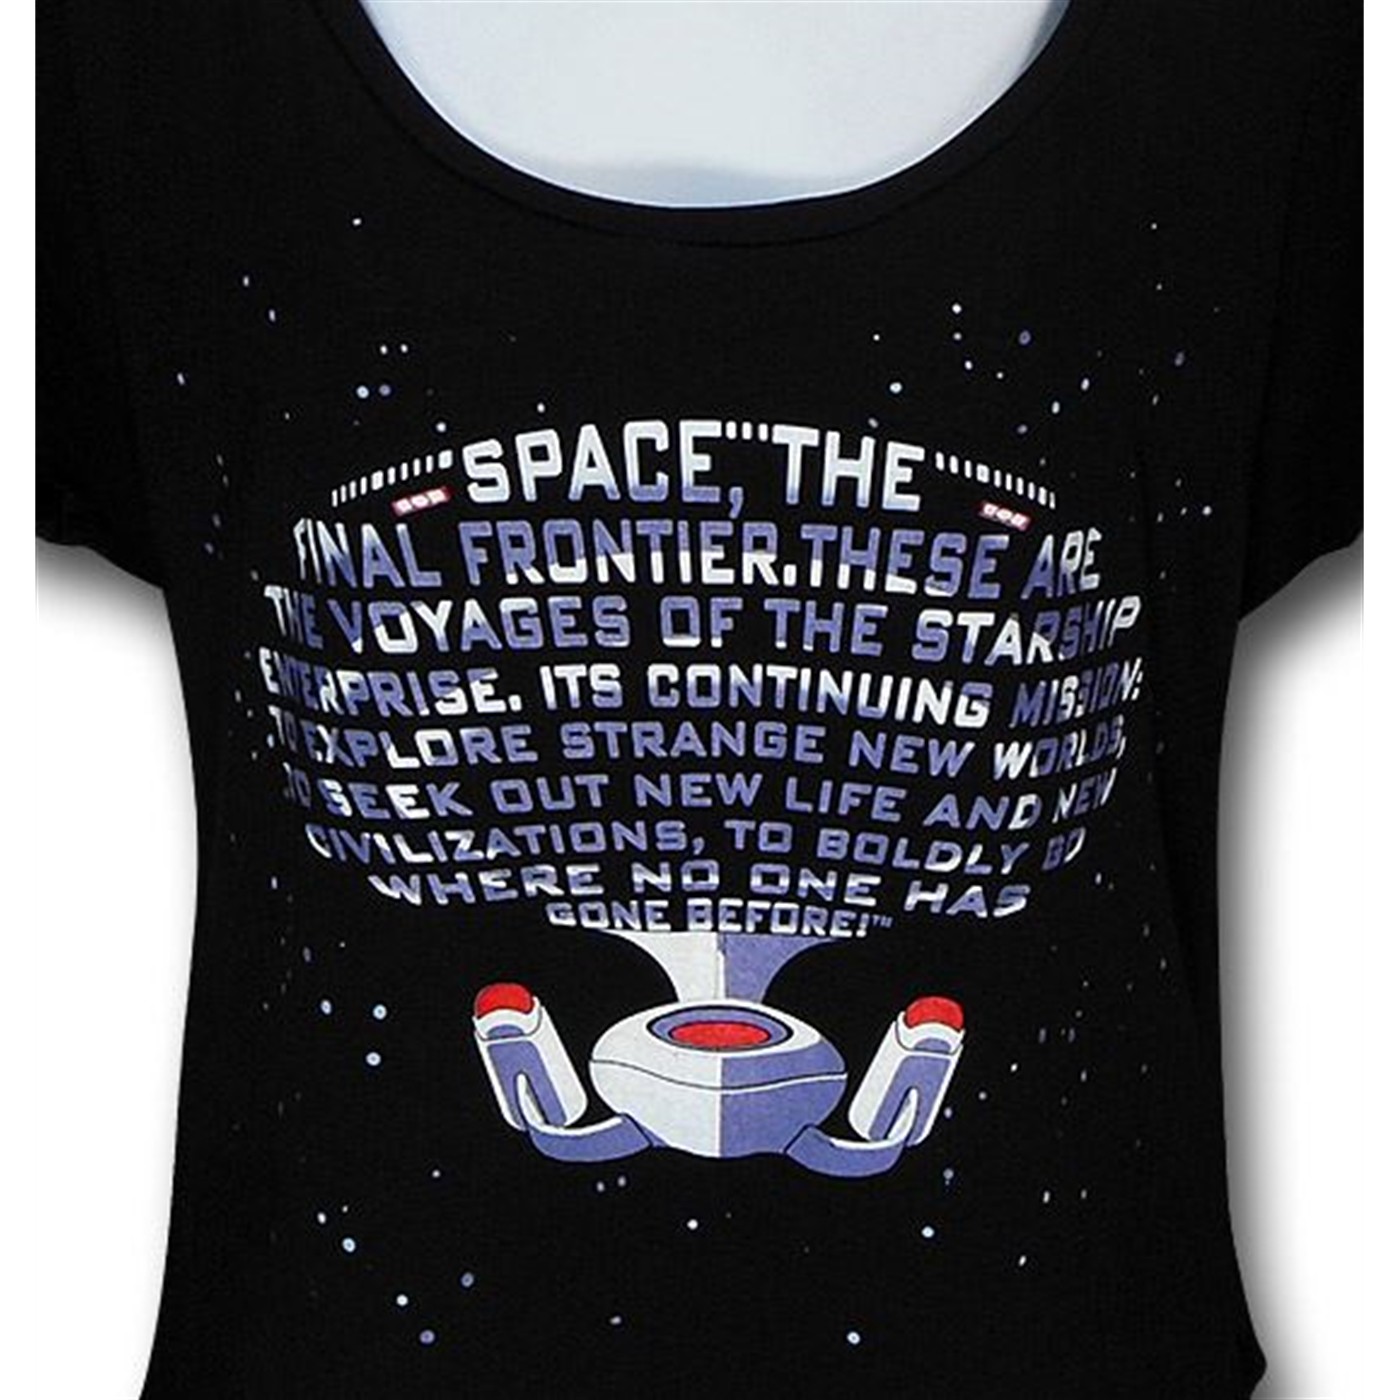 Star Trek Enterprise Text Dolman Women's T-Shirt